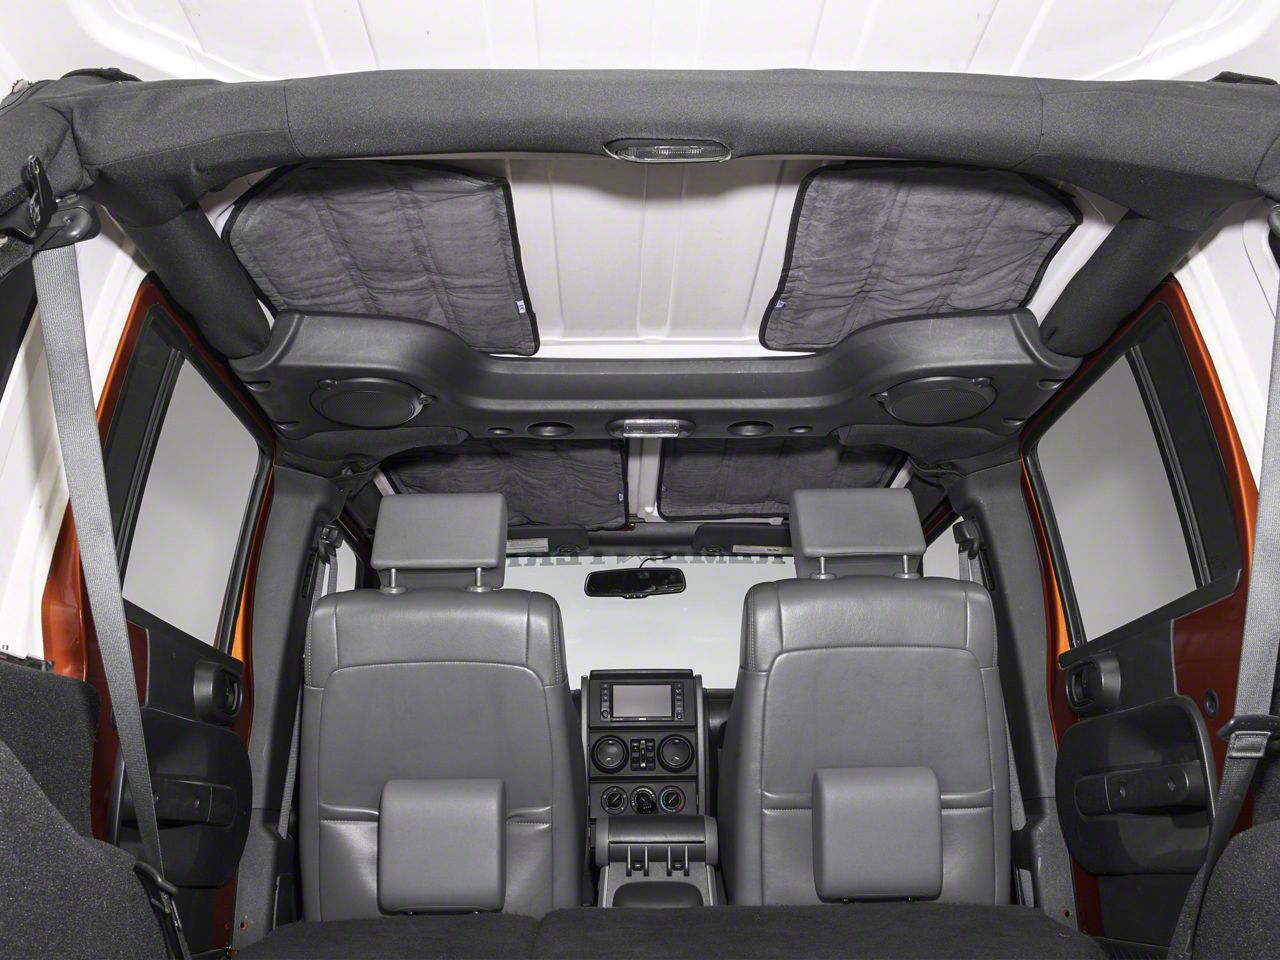 Bolaxin Black Oxford Hardtop Sound Deadener & Insulation for 2012-2018 Jeep Wrangler for 2 Doors